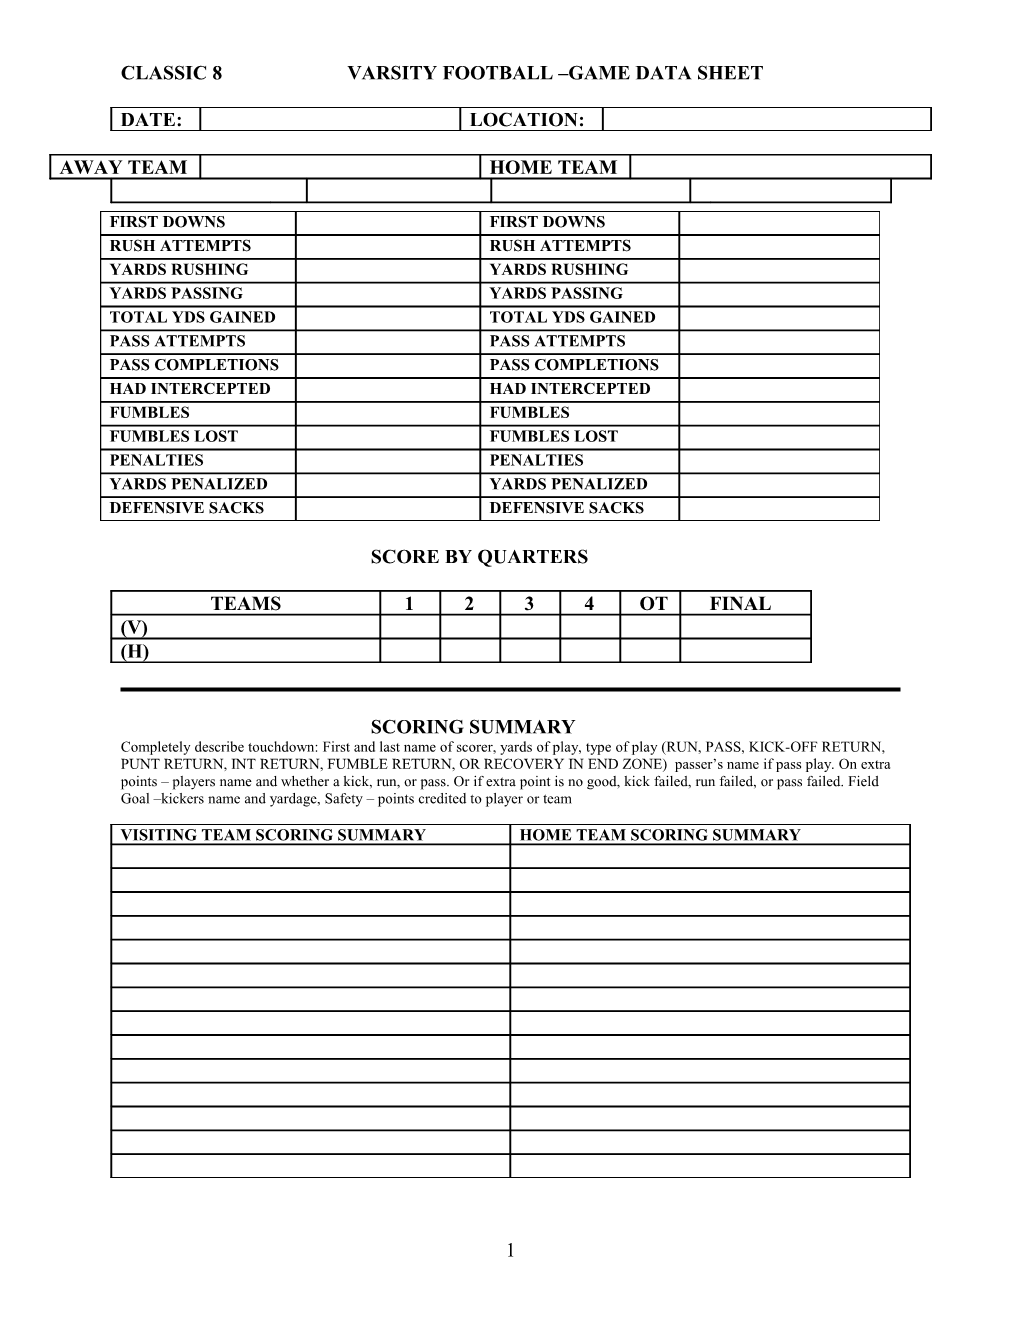 Classic 8 Varsity Football Game Data Sheet